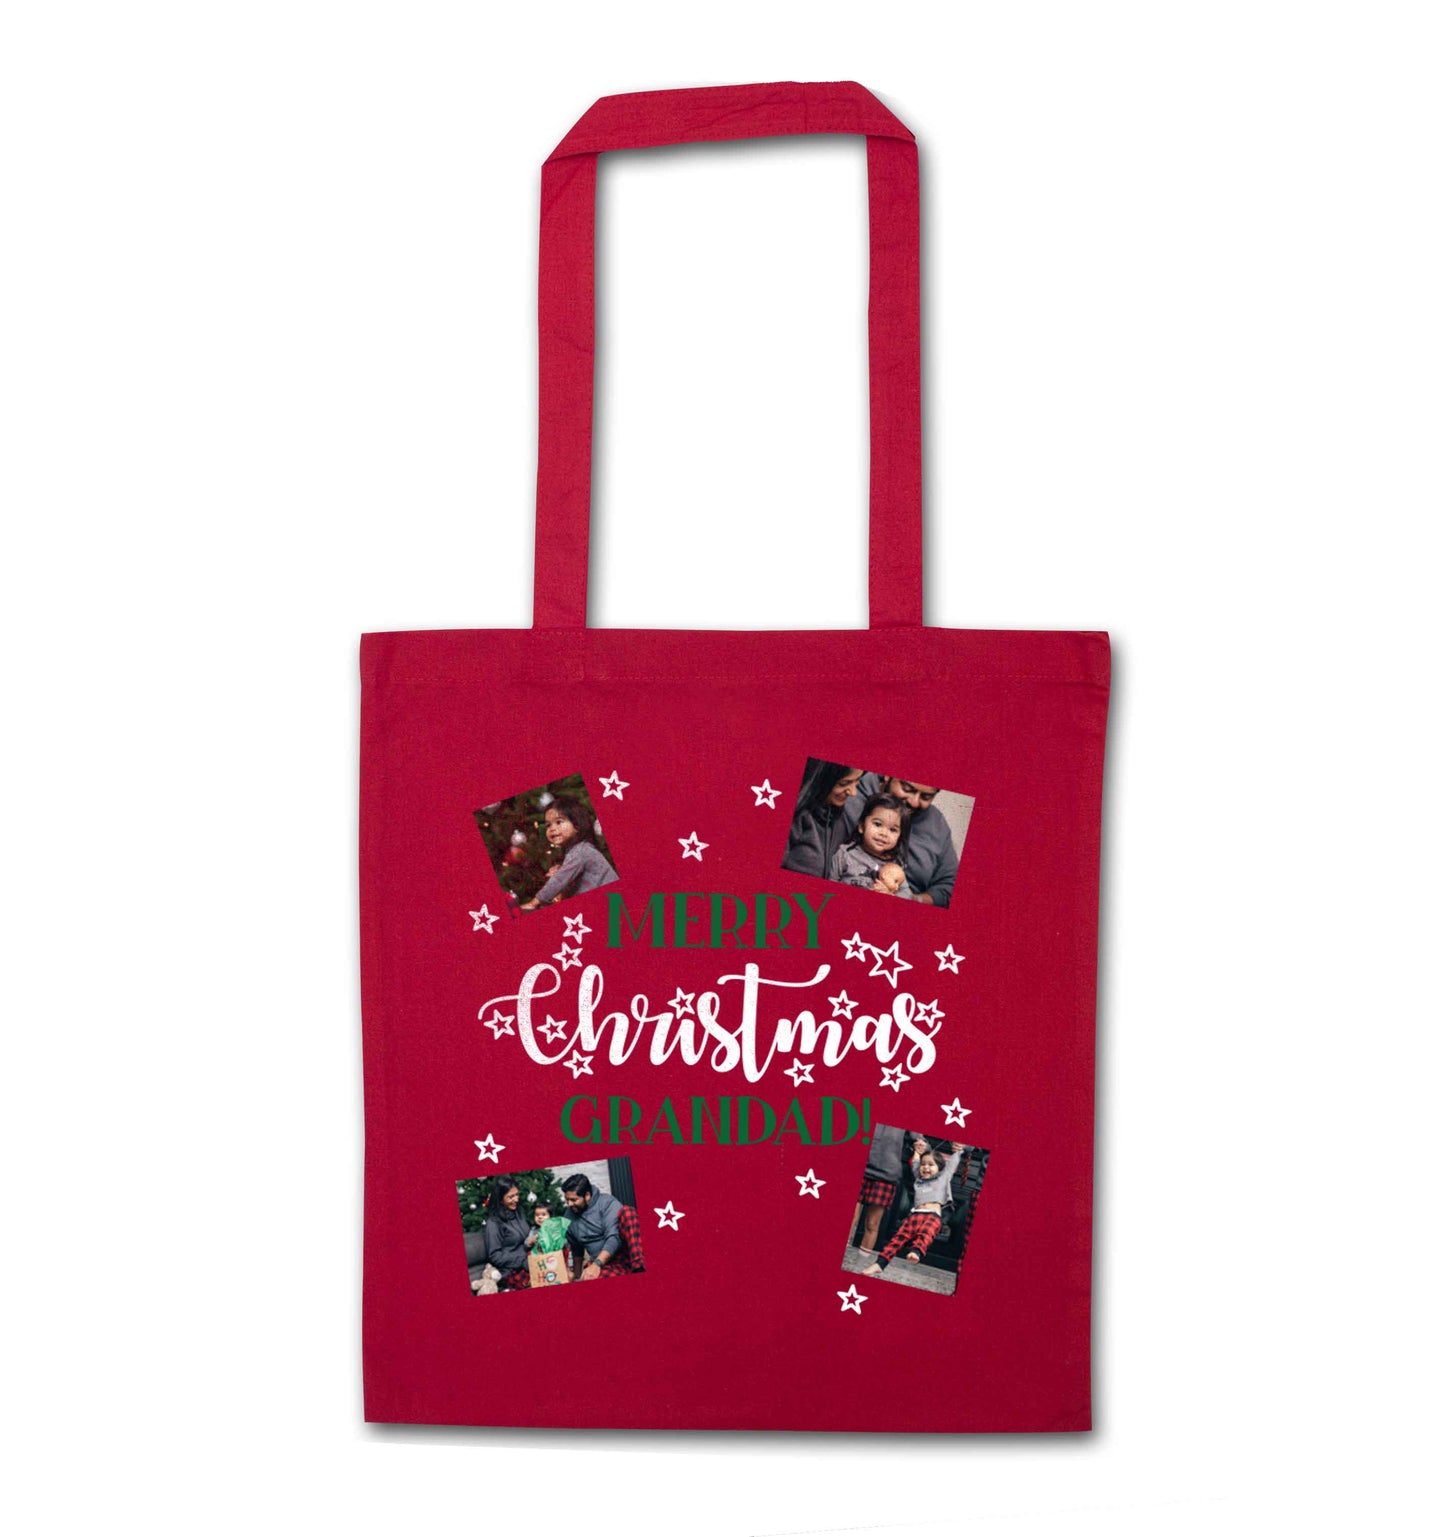 Merry Christmas grandad red tote bag